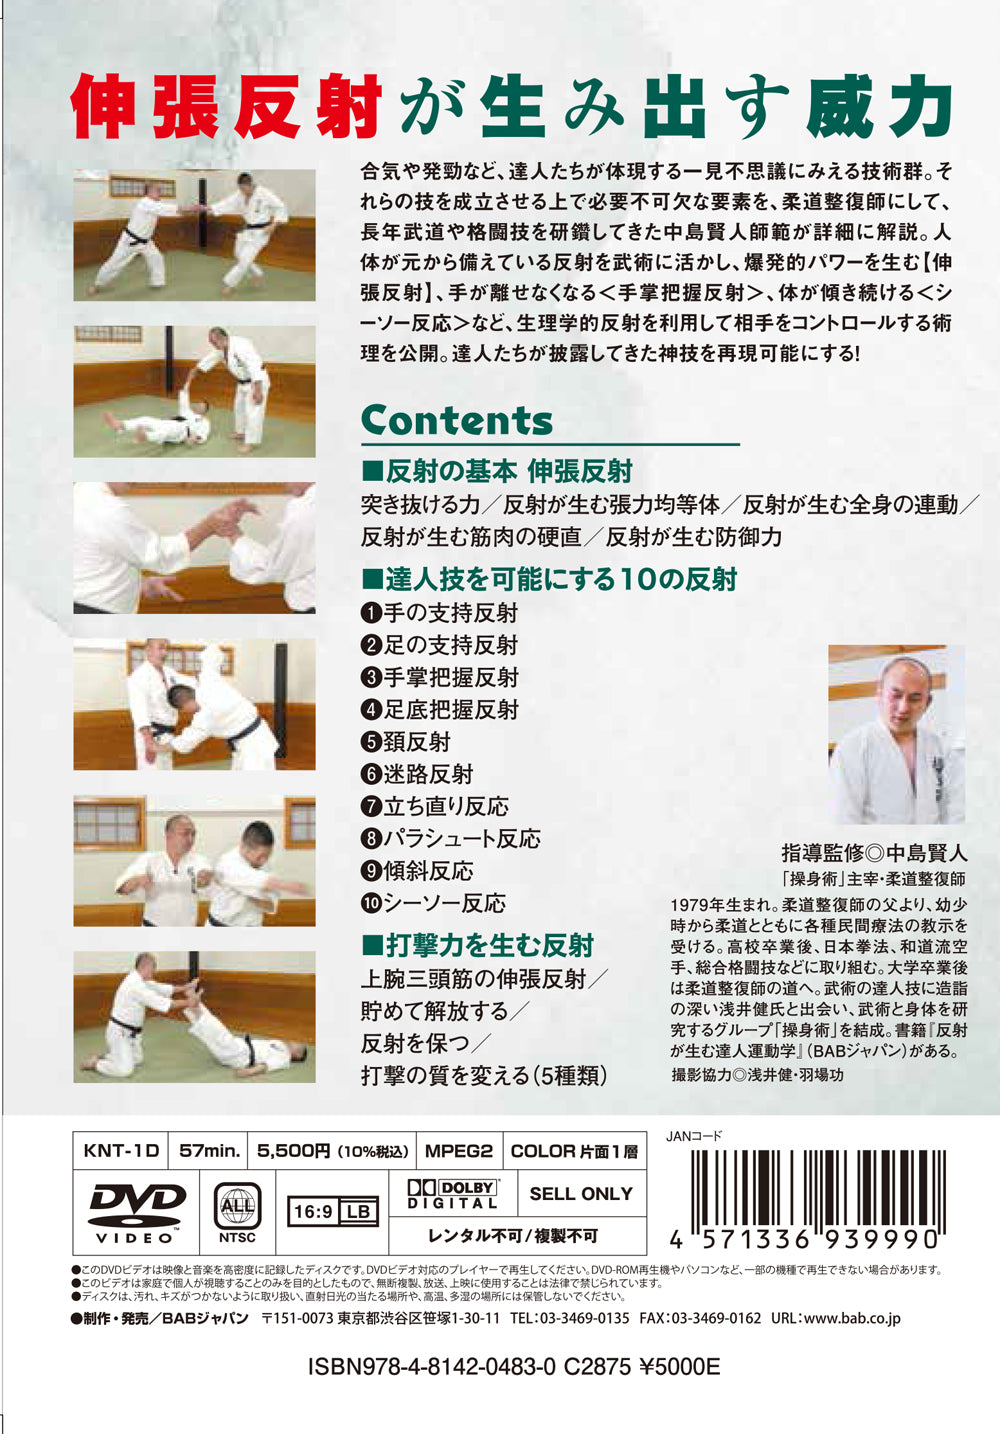 Soshinjutsu: Techniques Using Muscle Reflex DVD by Kento Nakajima